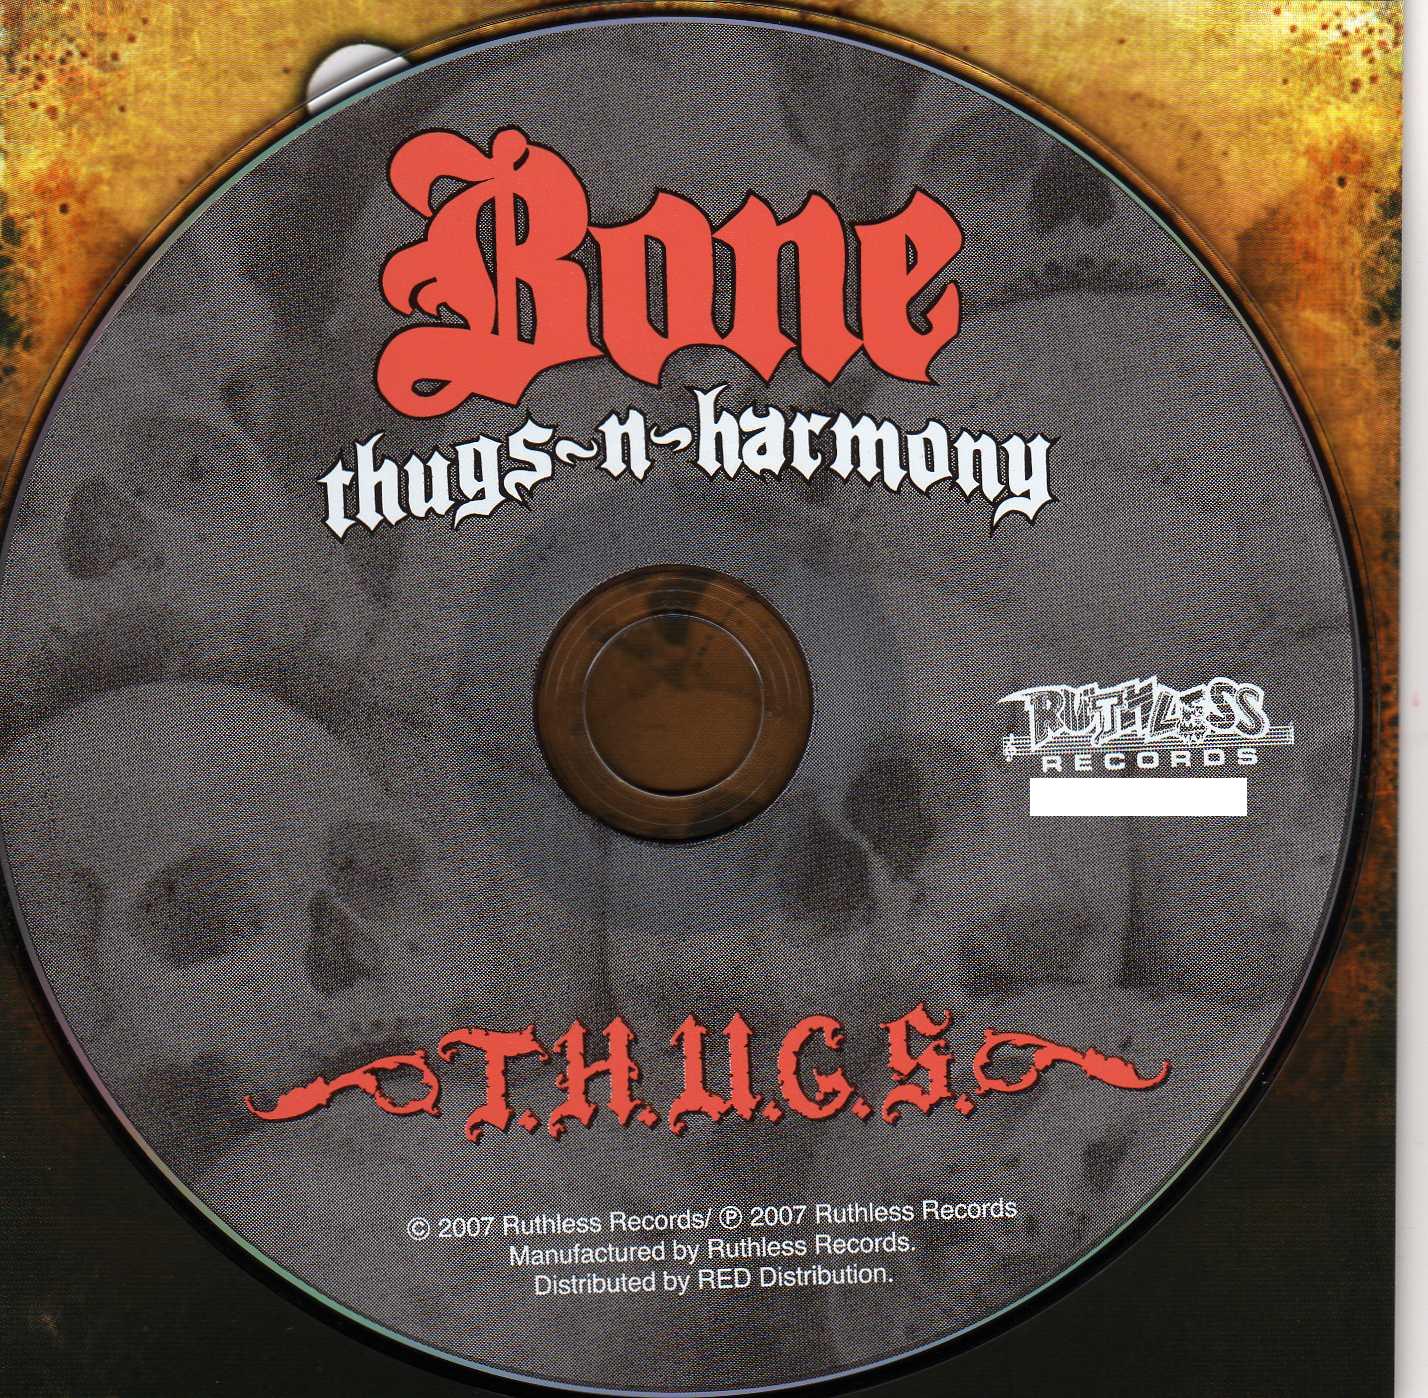 Bone harmony. Ruthless records. Ruthless records обои на телефон. Bone Thugs n Harmony t Shirt. I'll give up three dozen of my Thugs.